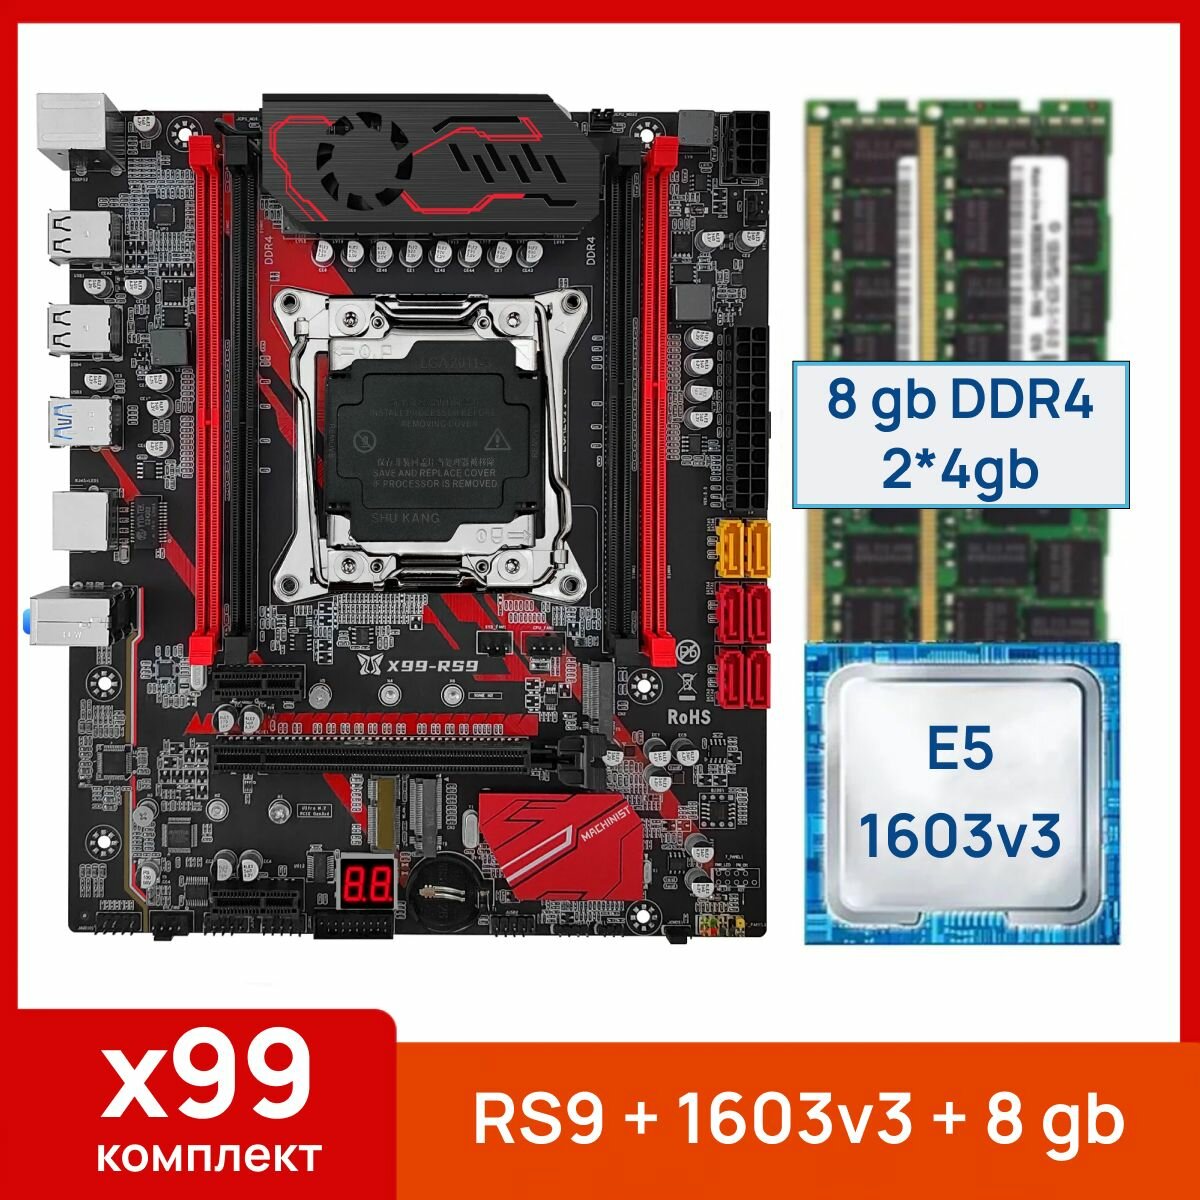 Комплект: Juxieshi/Machinist X99 RS9 + Xeon E5 1603v3 + 8 gb(2x4gb) DDR4 ecc reg